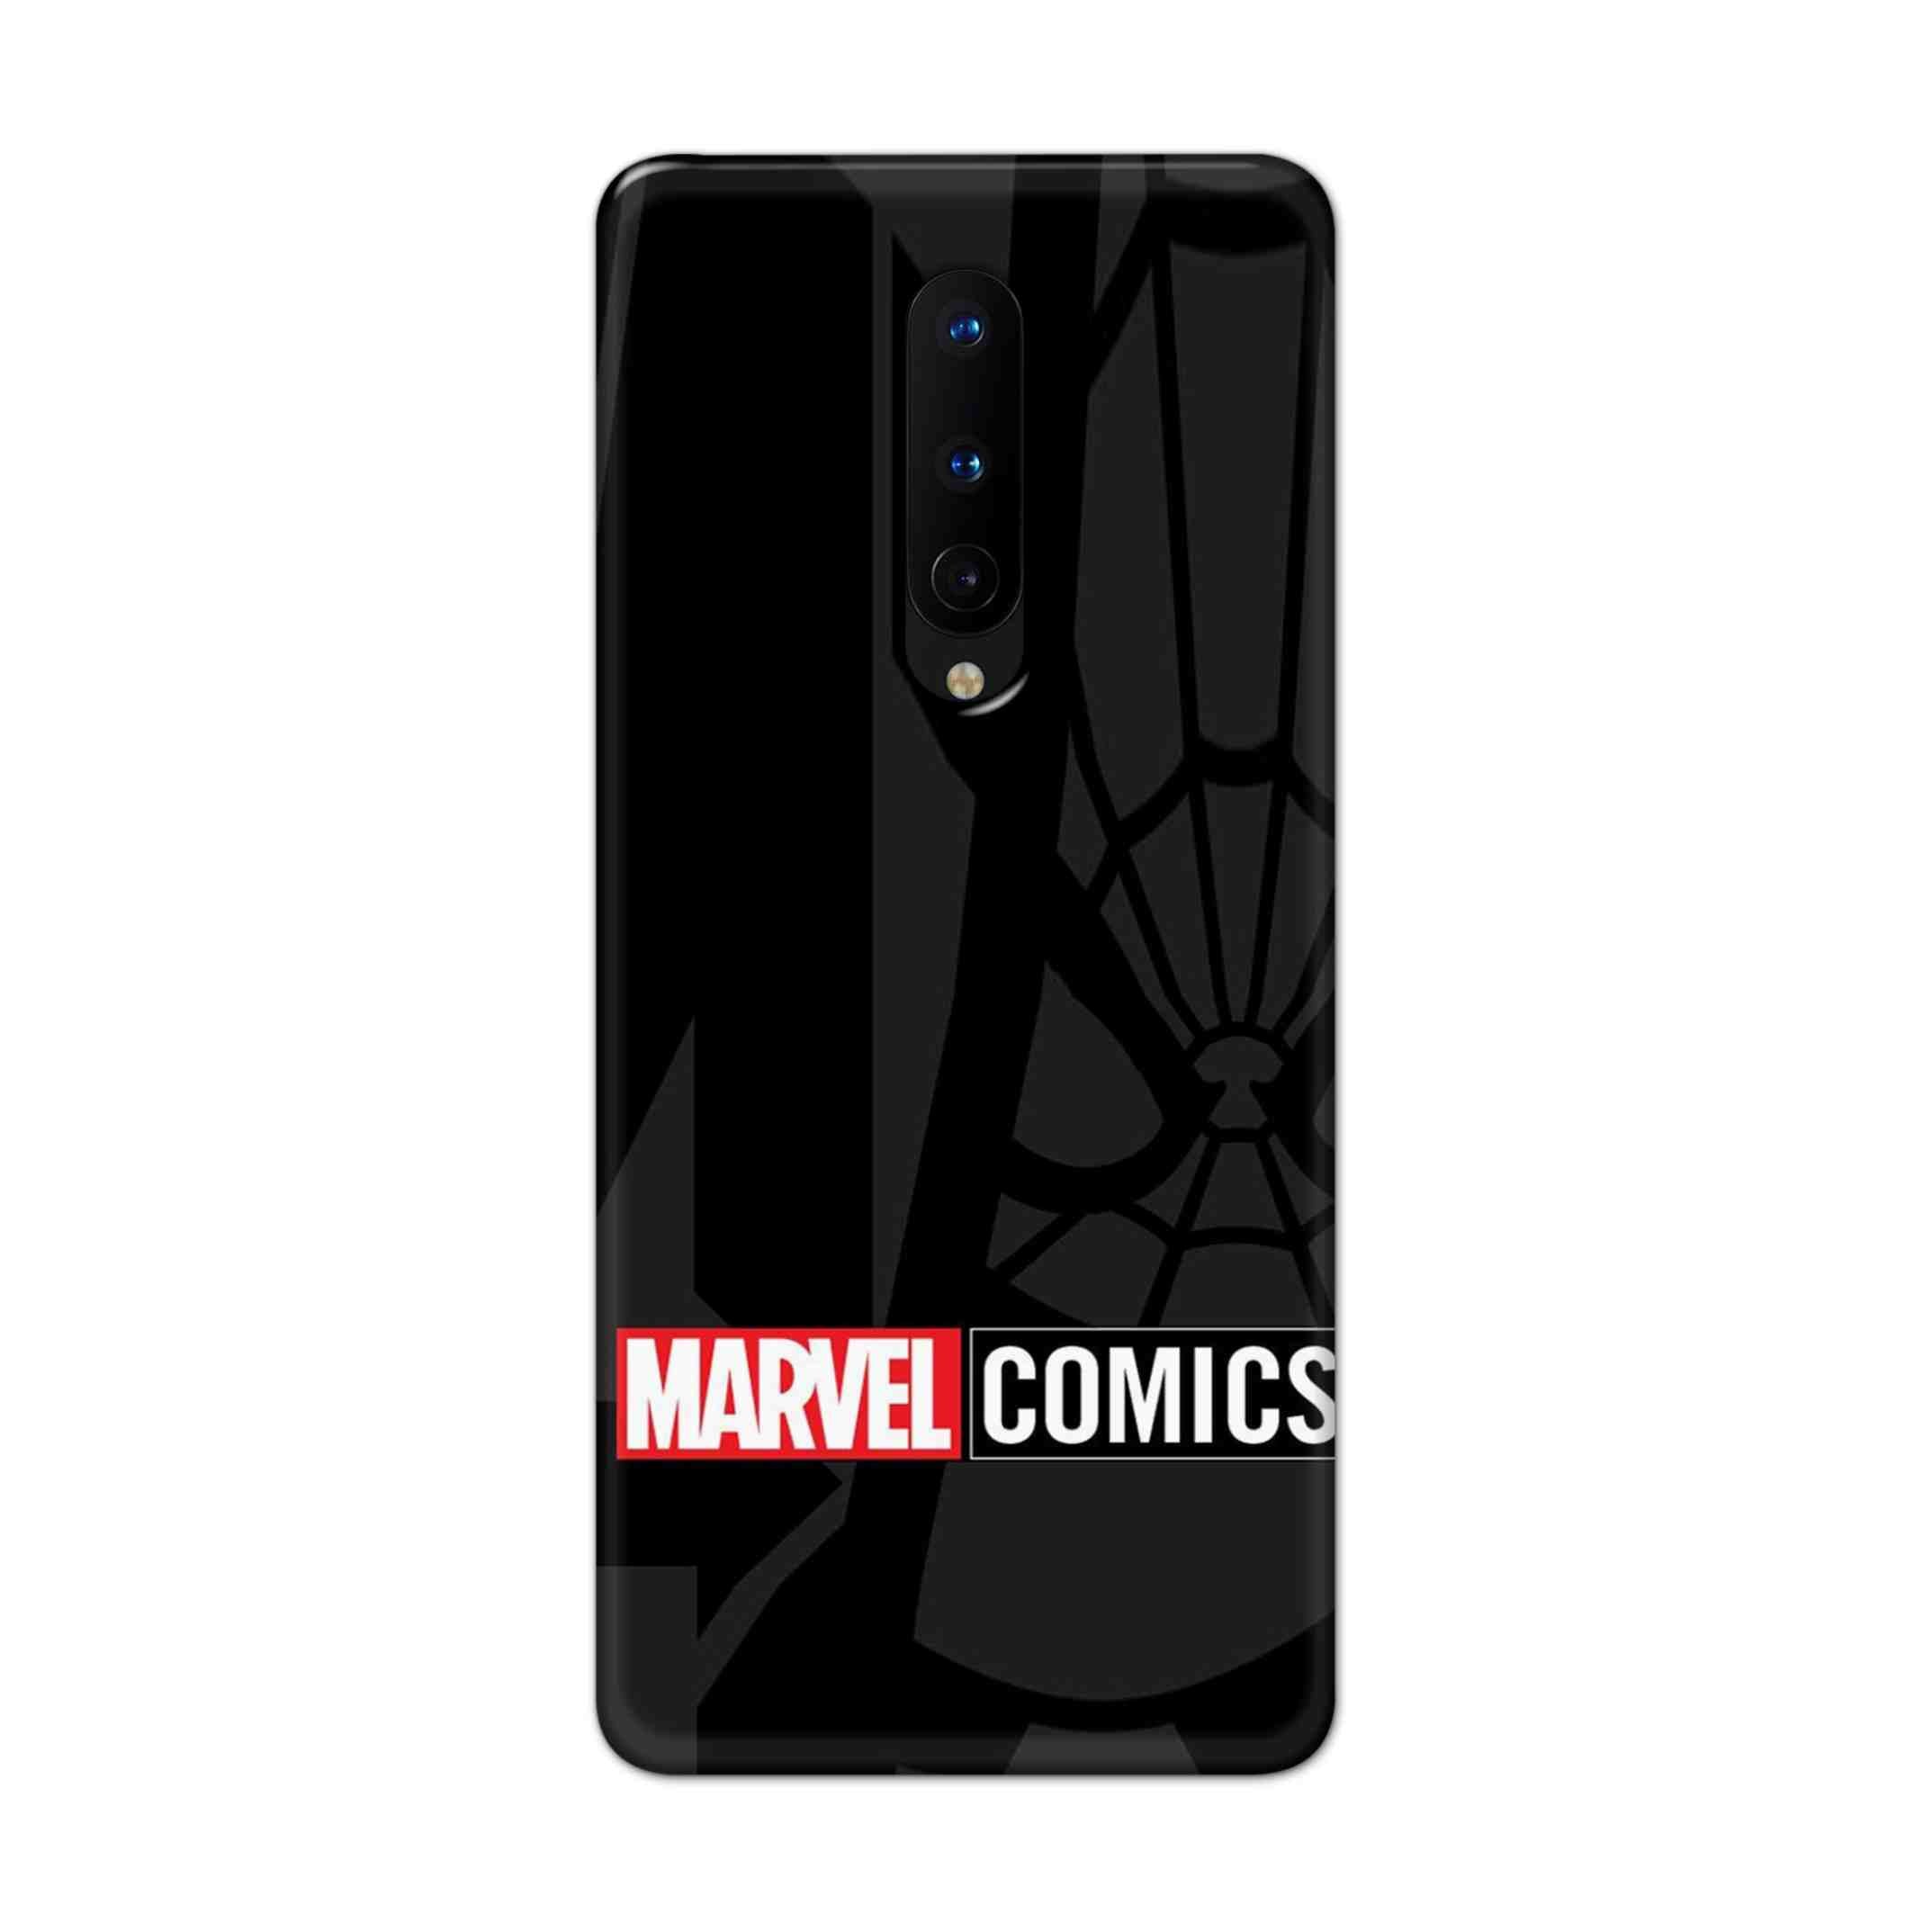 Buy Marvel Comics Hard Back Mobile Phone Case Cover For OnePlus 8 Online